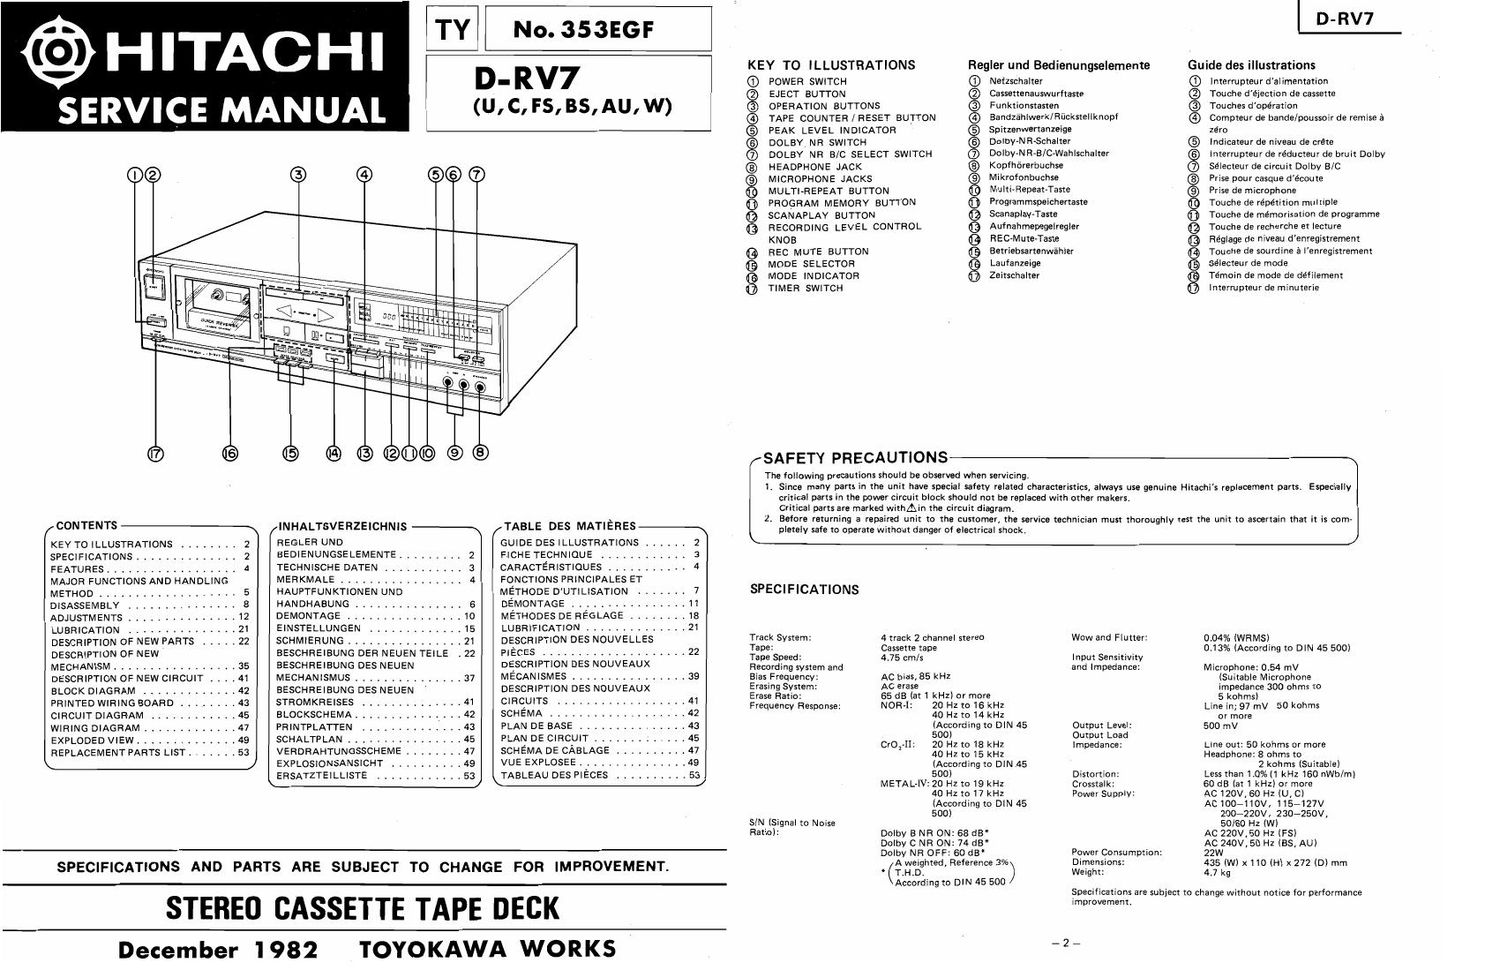 Hitachi DRV 7 Service Manual